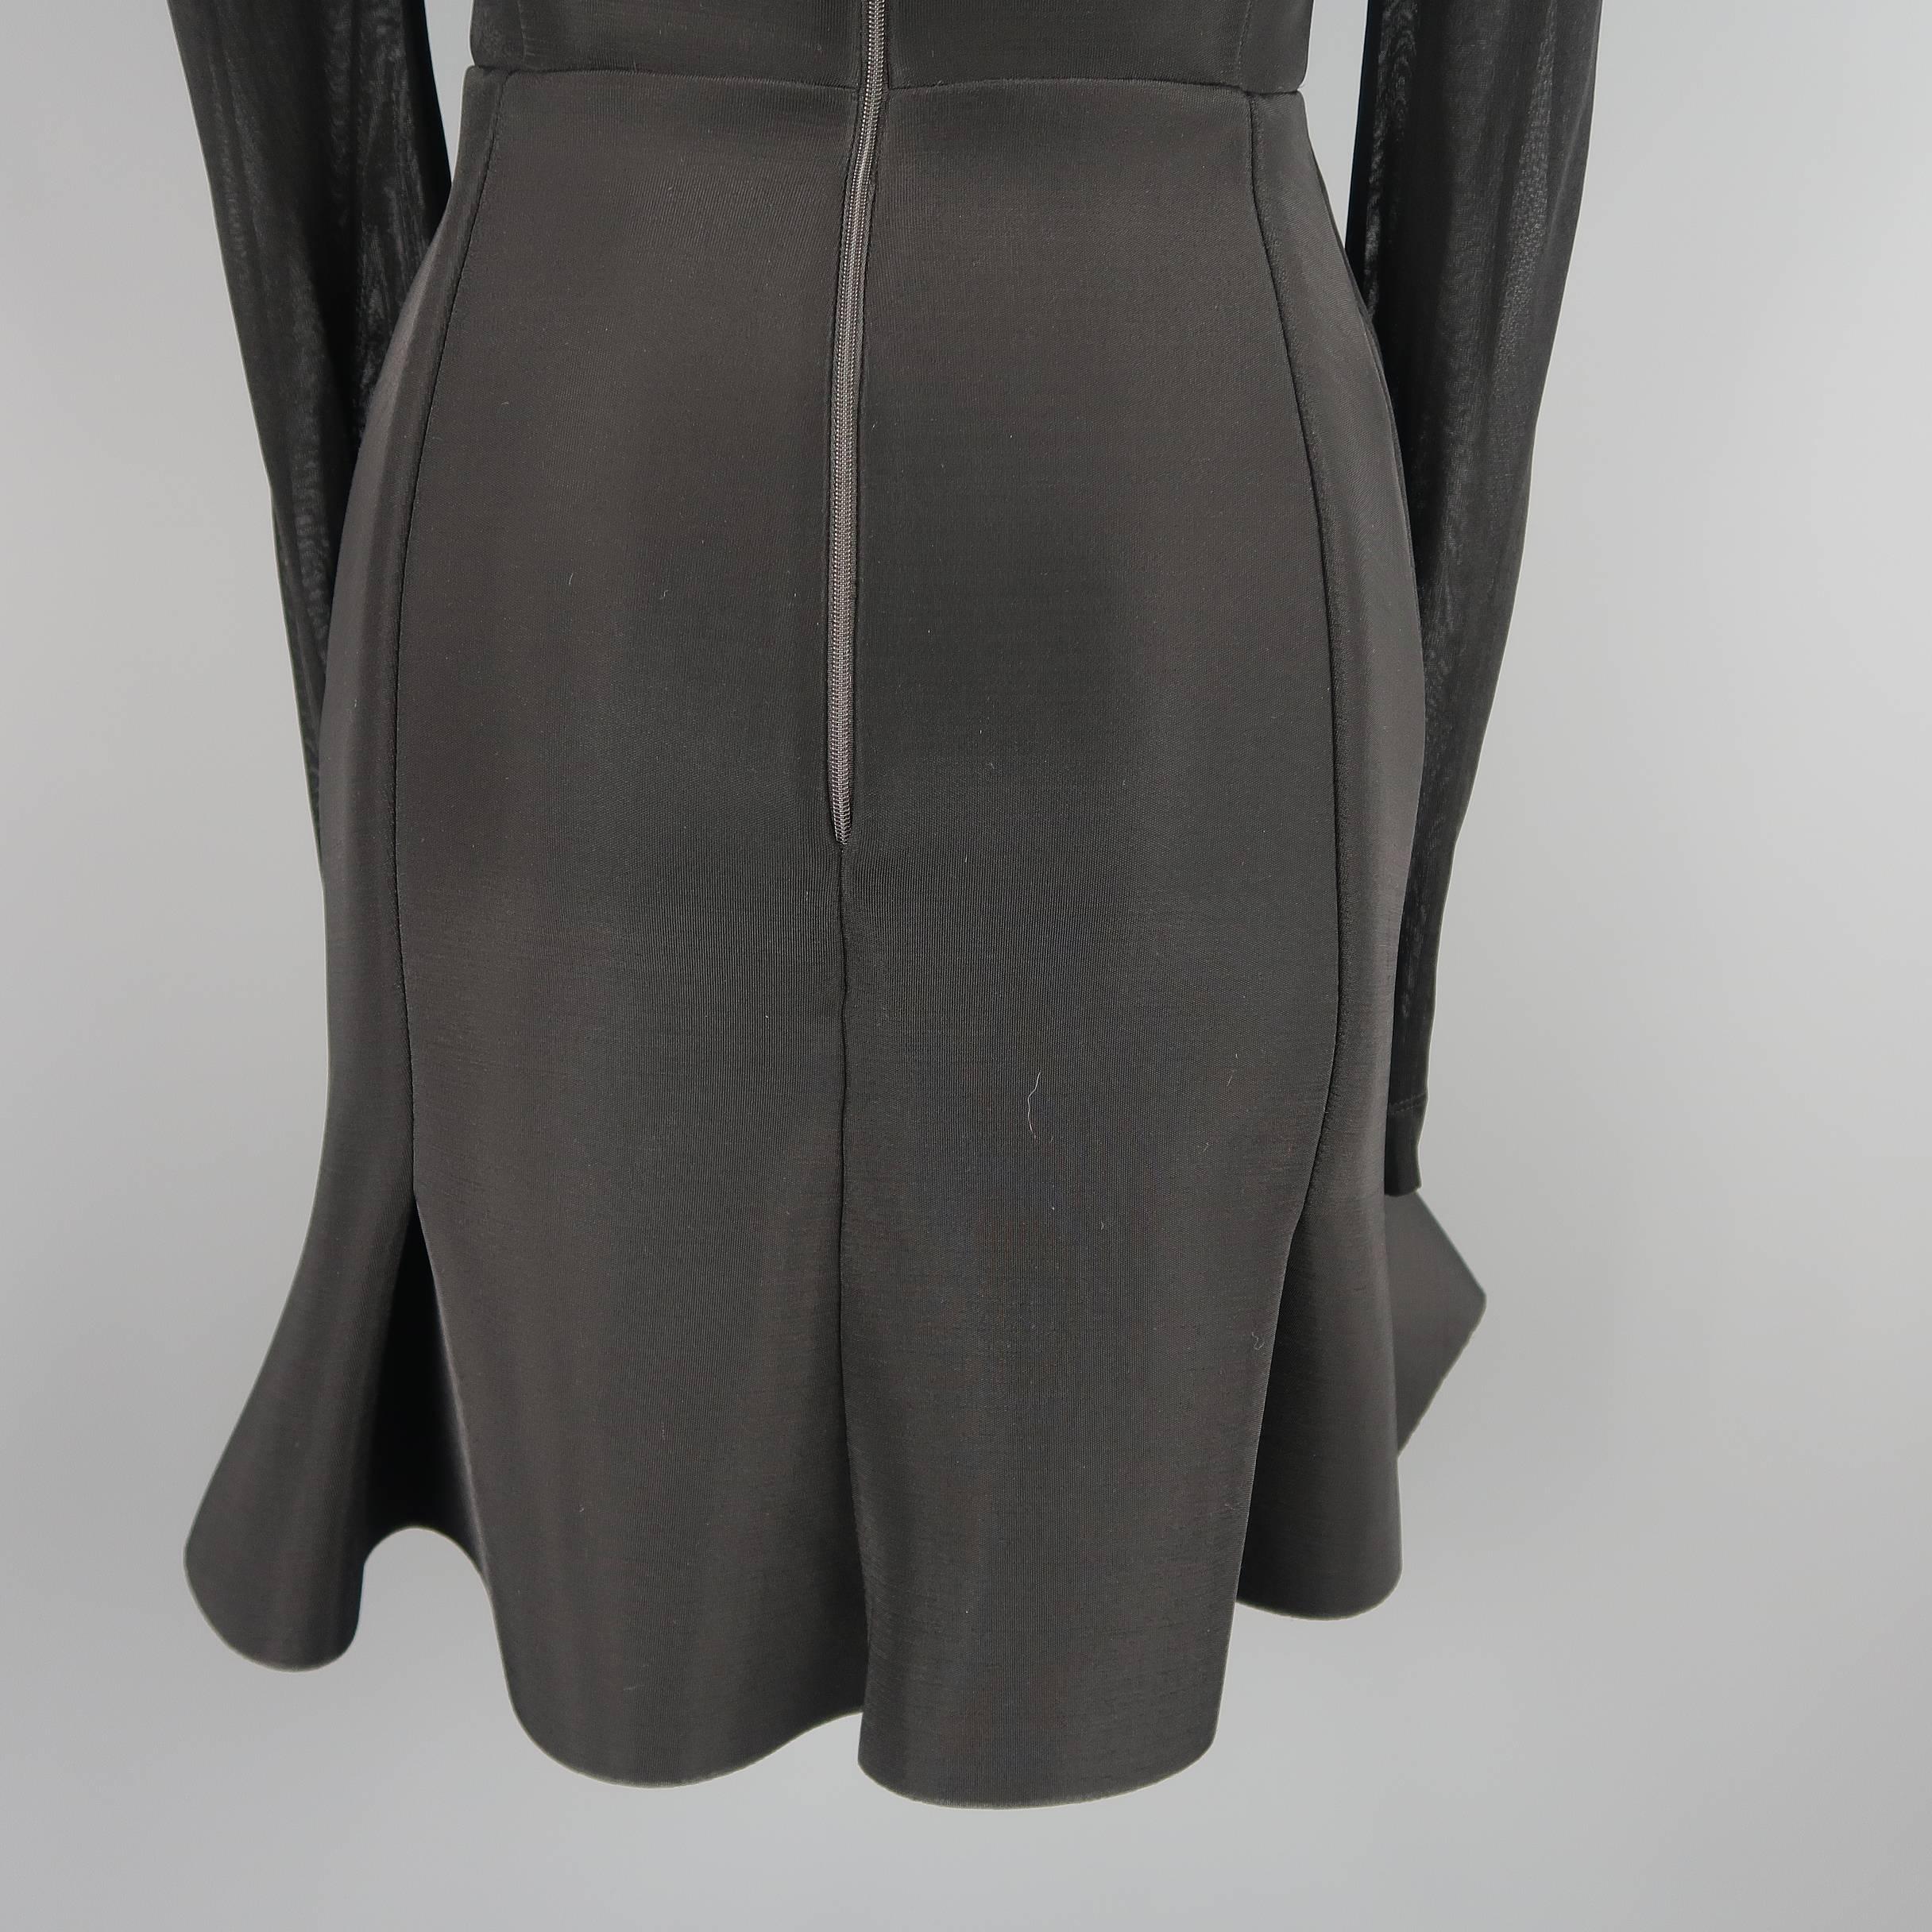 Women's ANTONIO BERARDI Size S Black & Green Neoprene Sheer Long Sleeve Dress